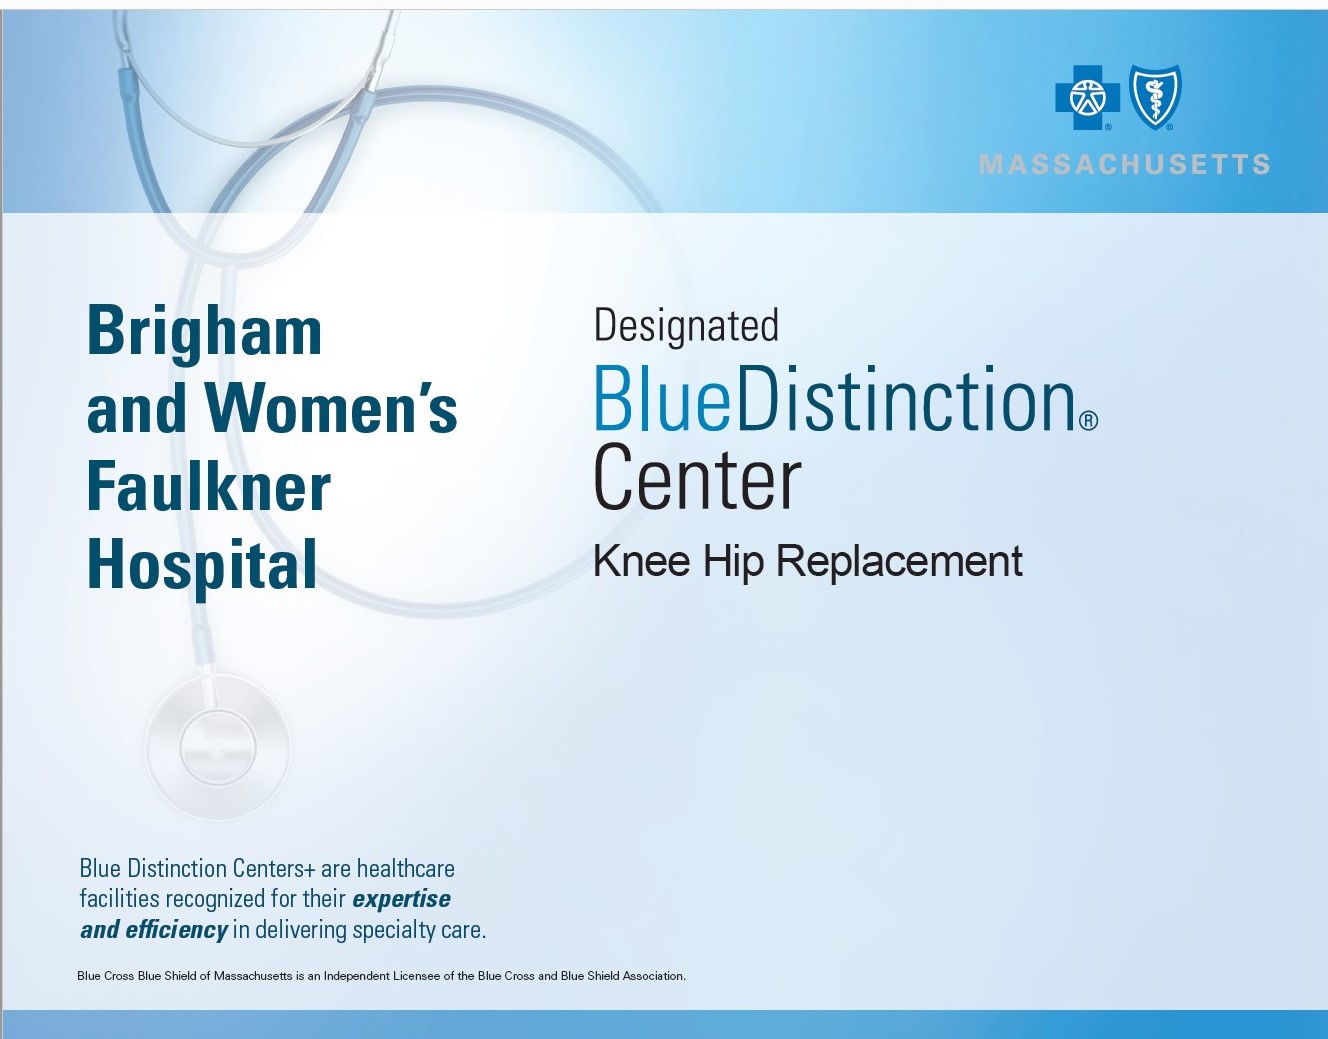 Blue Distinction Center designation for knee and hip replacement surgeries